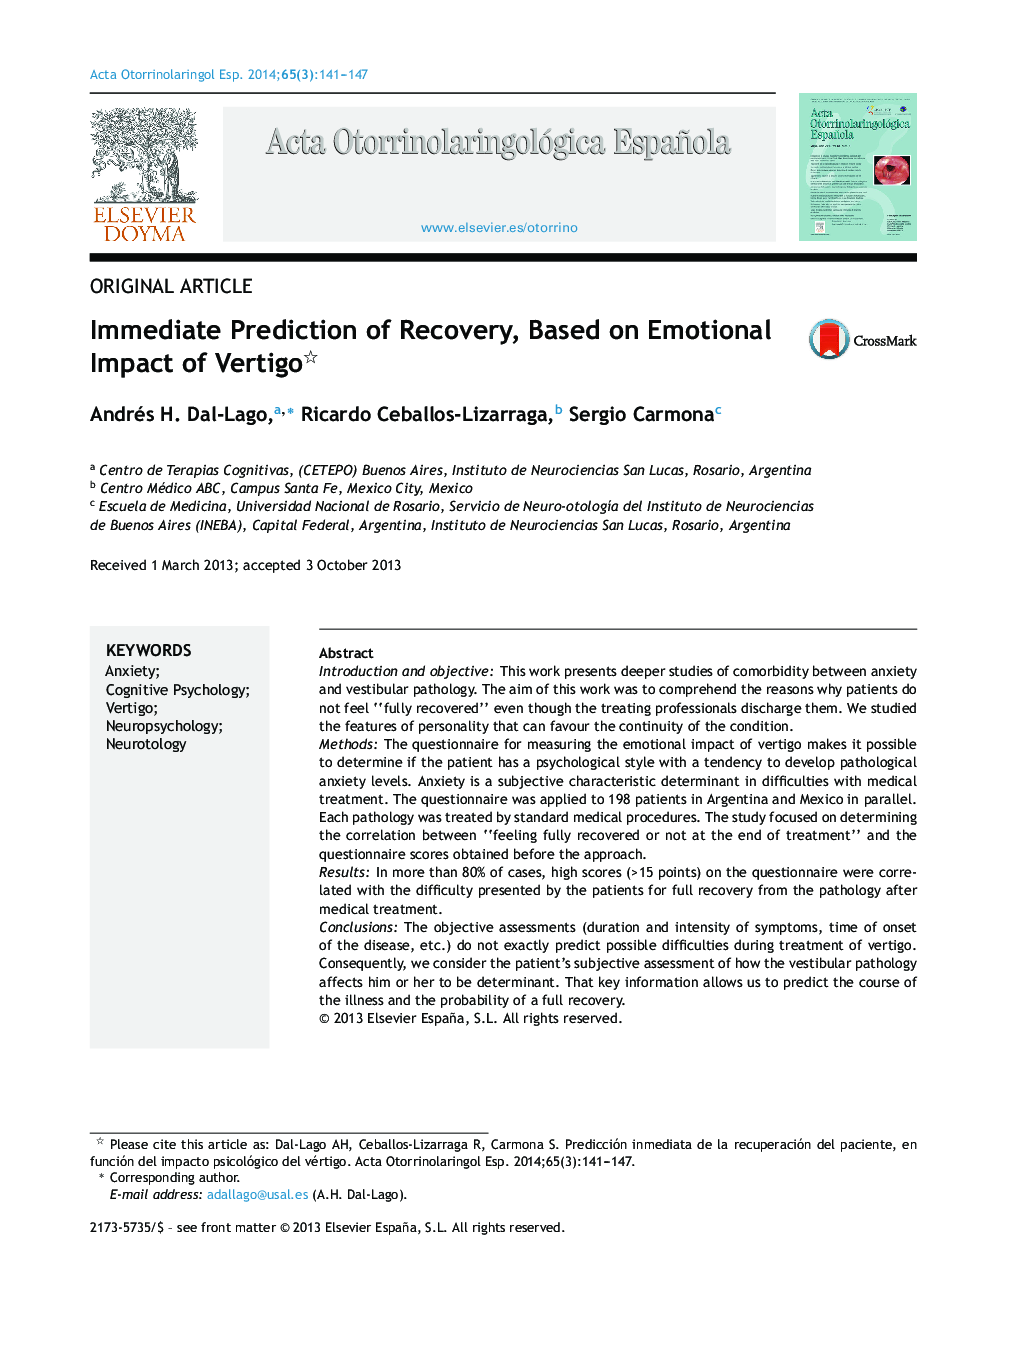 Immediate Prediction of Recovery, Based on Emotional Impact of Vertigo 